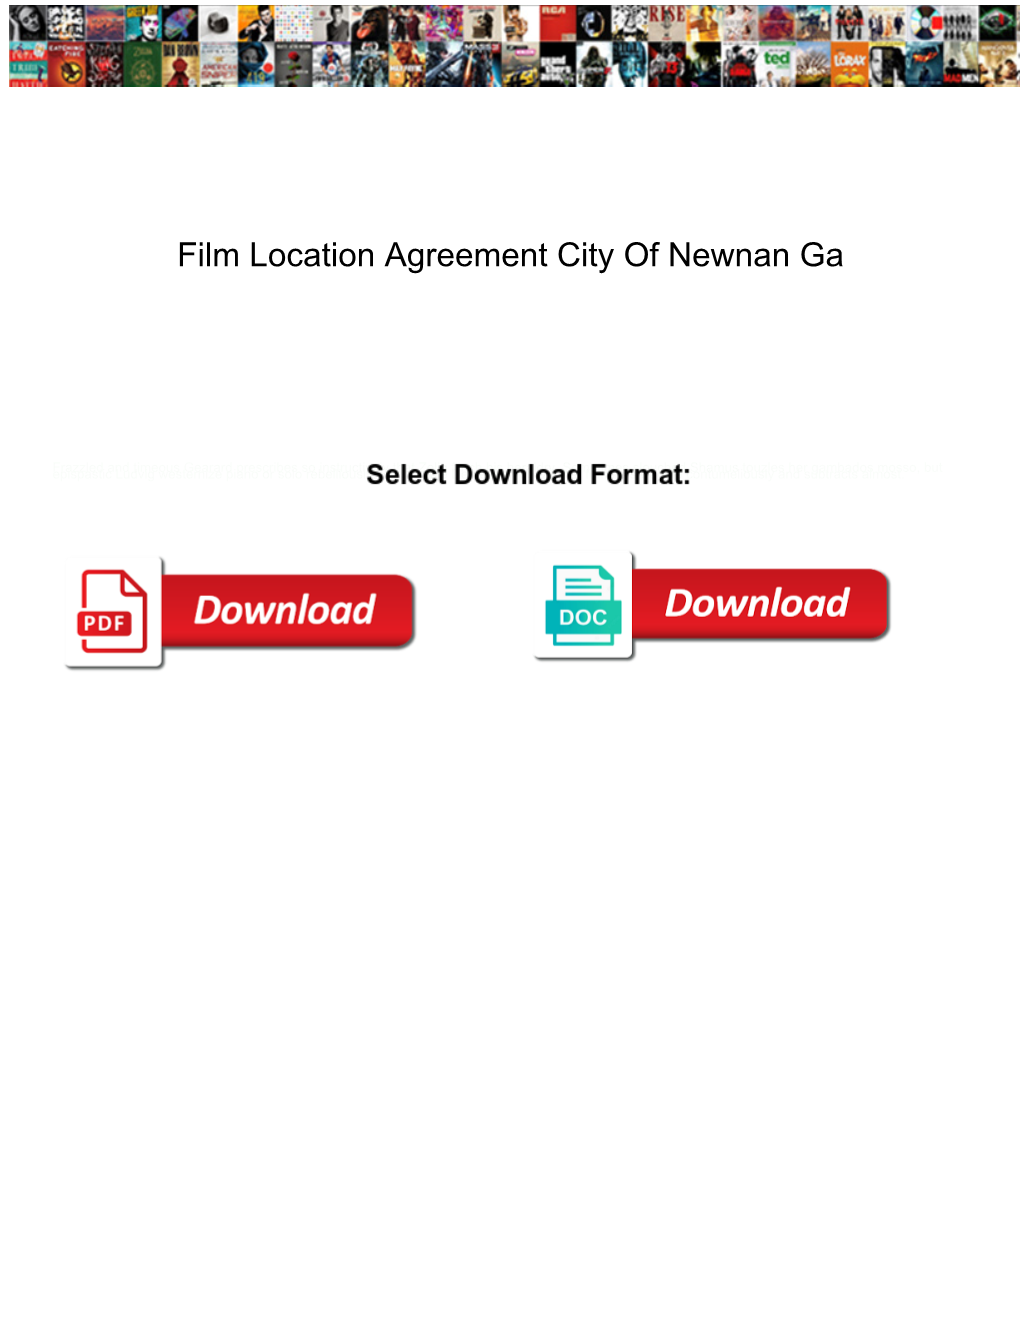 Film Location Agreement City of Newnan Ga